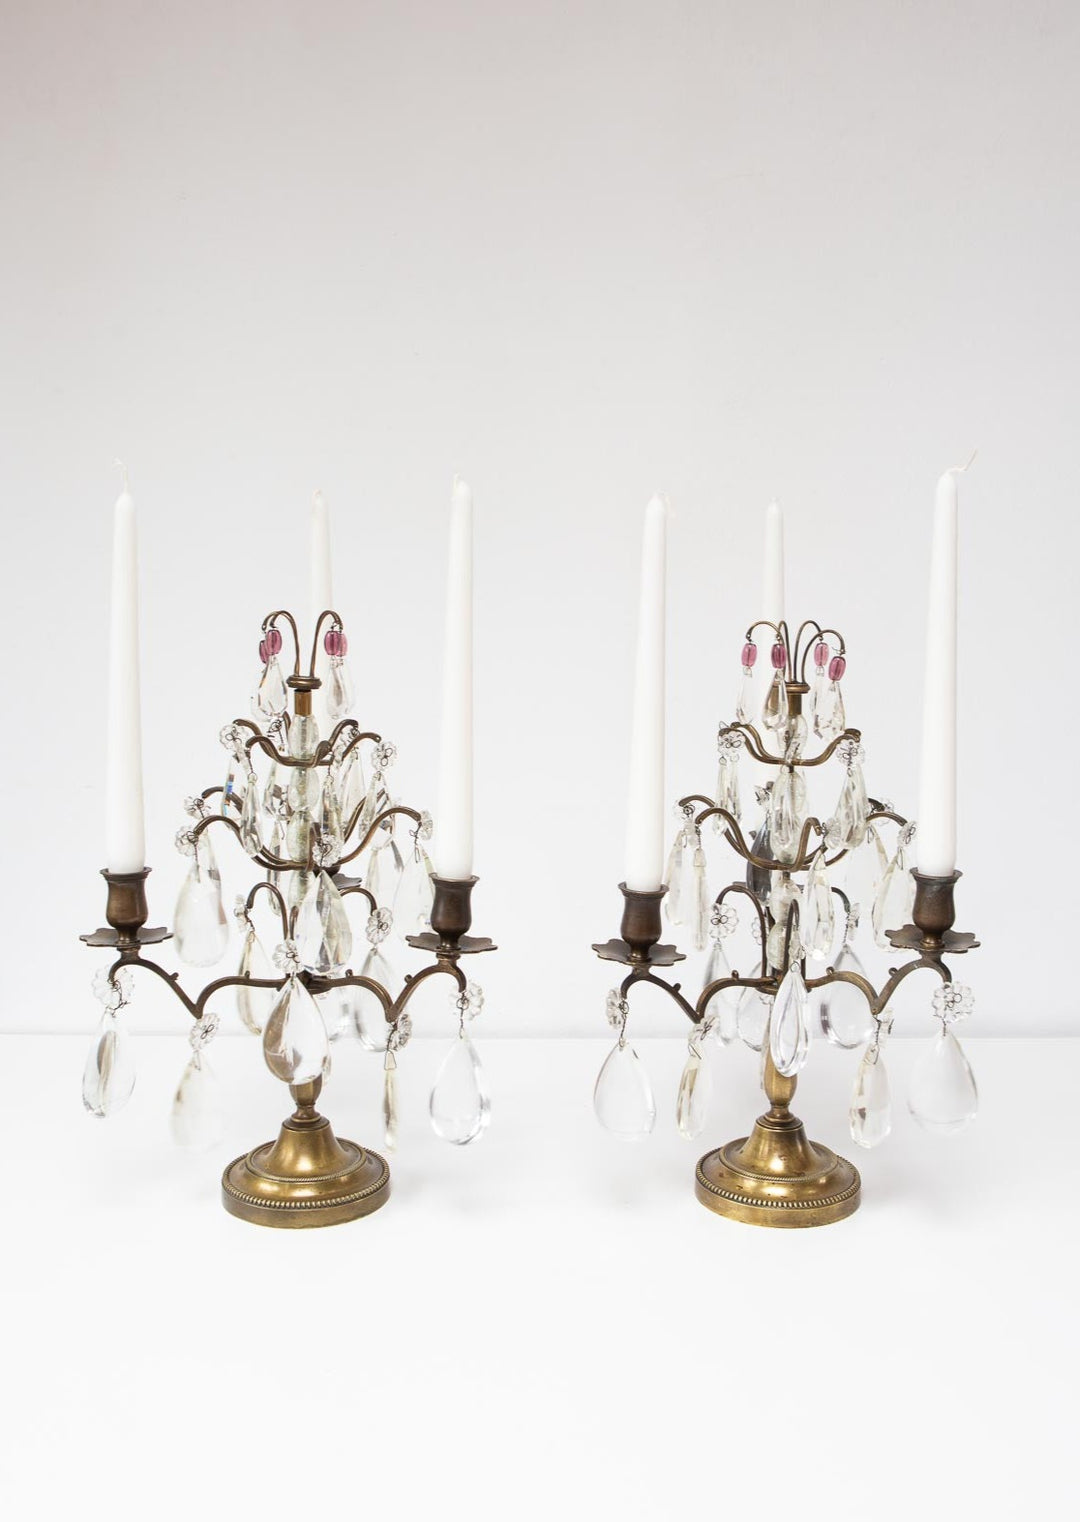 antiguos candelabros franceses girandoles latón y cristales antique french candelabra